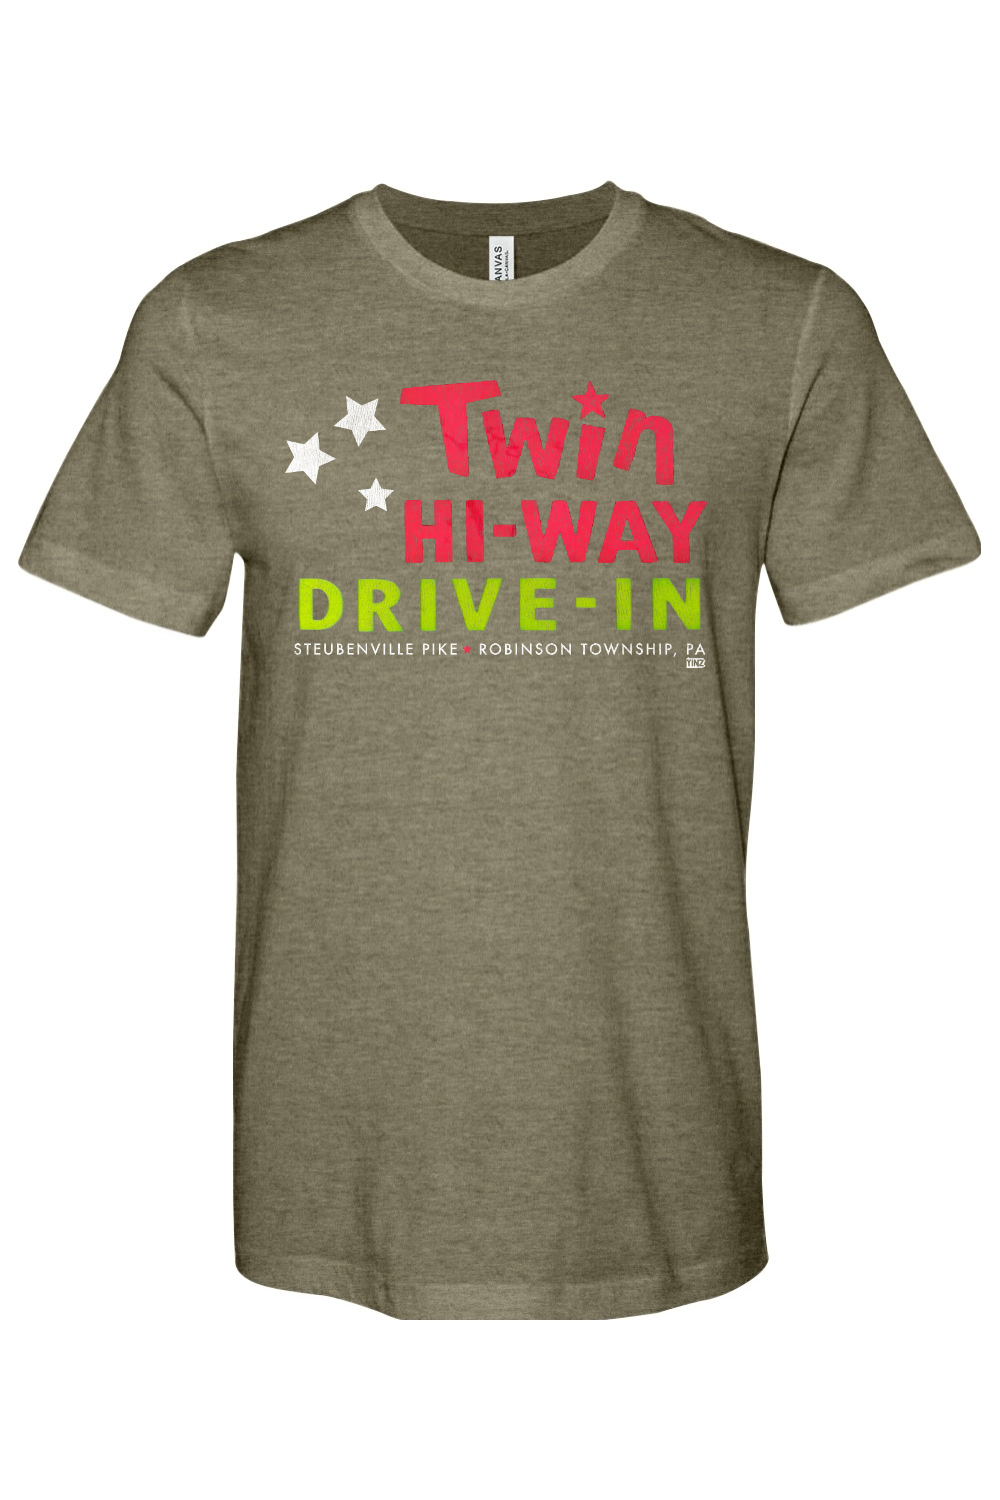 Twin Hi-Way Drive-In - Robinson Township - Yinzylvania